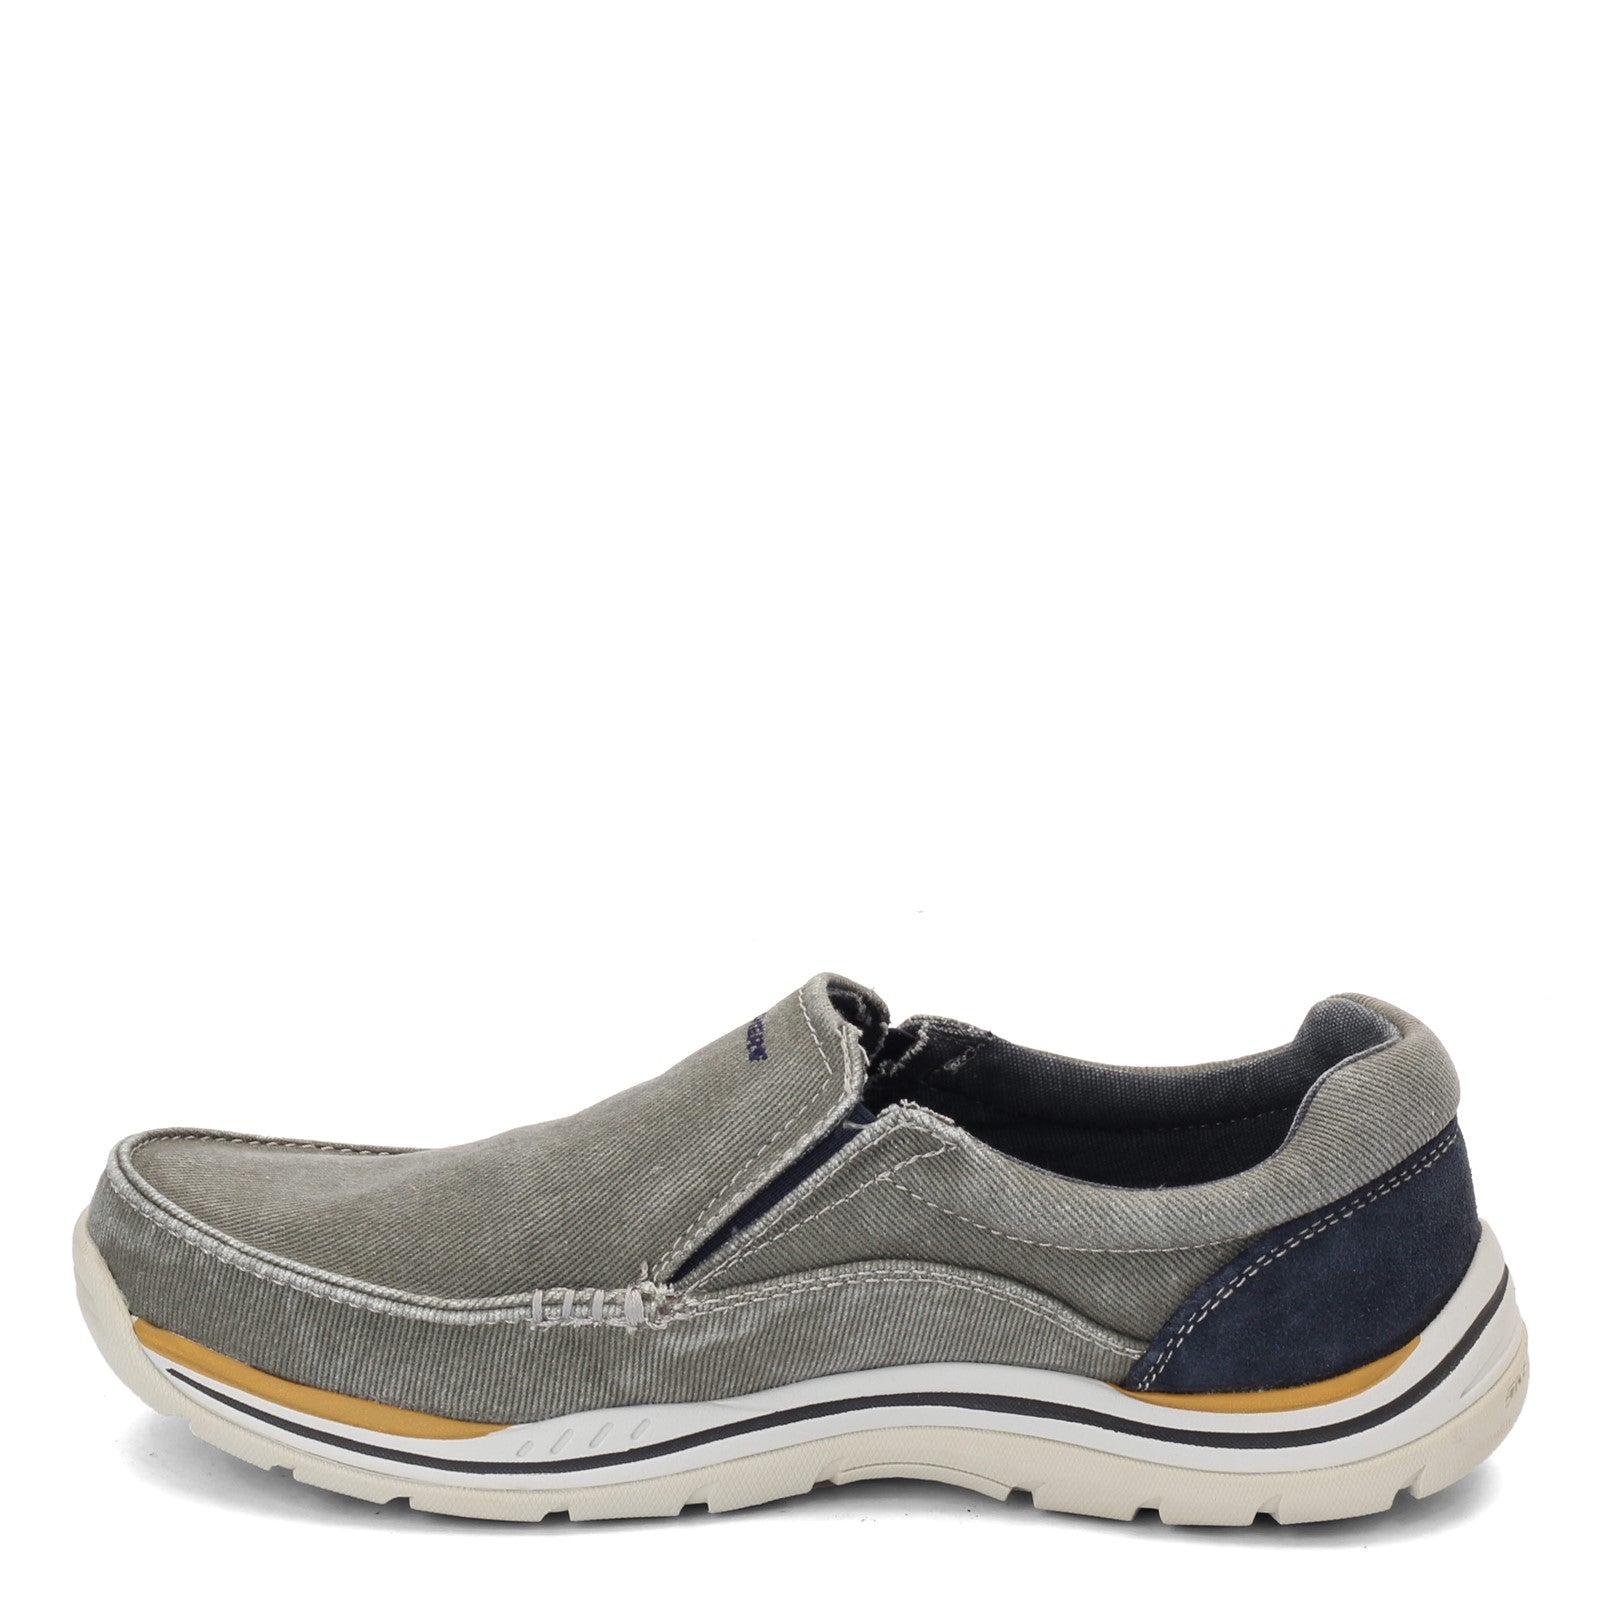 Buy Skechers Mens Crossbar - STILHOLT NVBK Casual Shoe - 11 UK (51887)  Navy/Black at Amazon.in